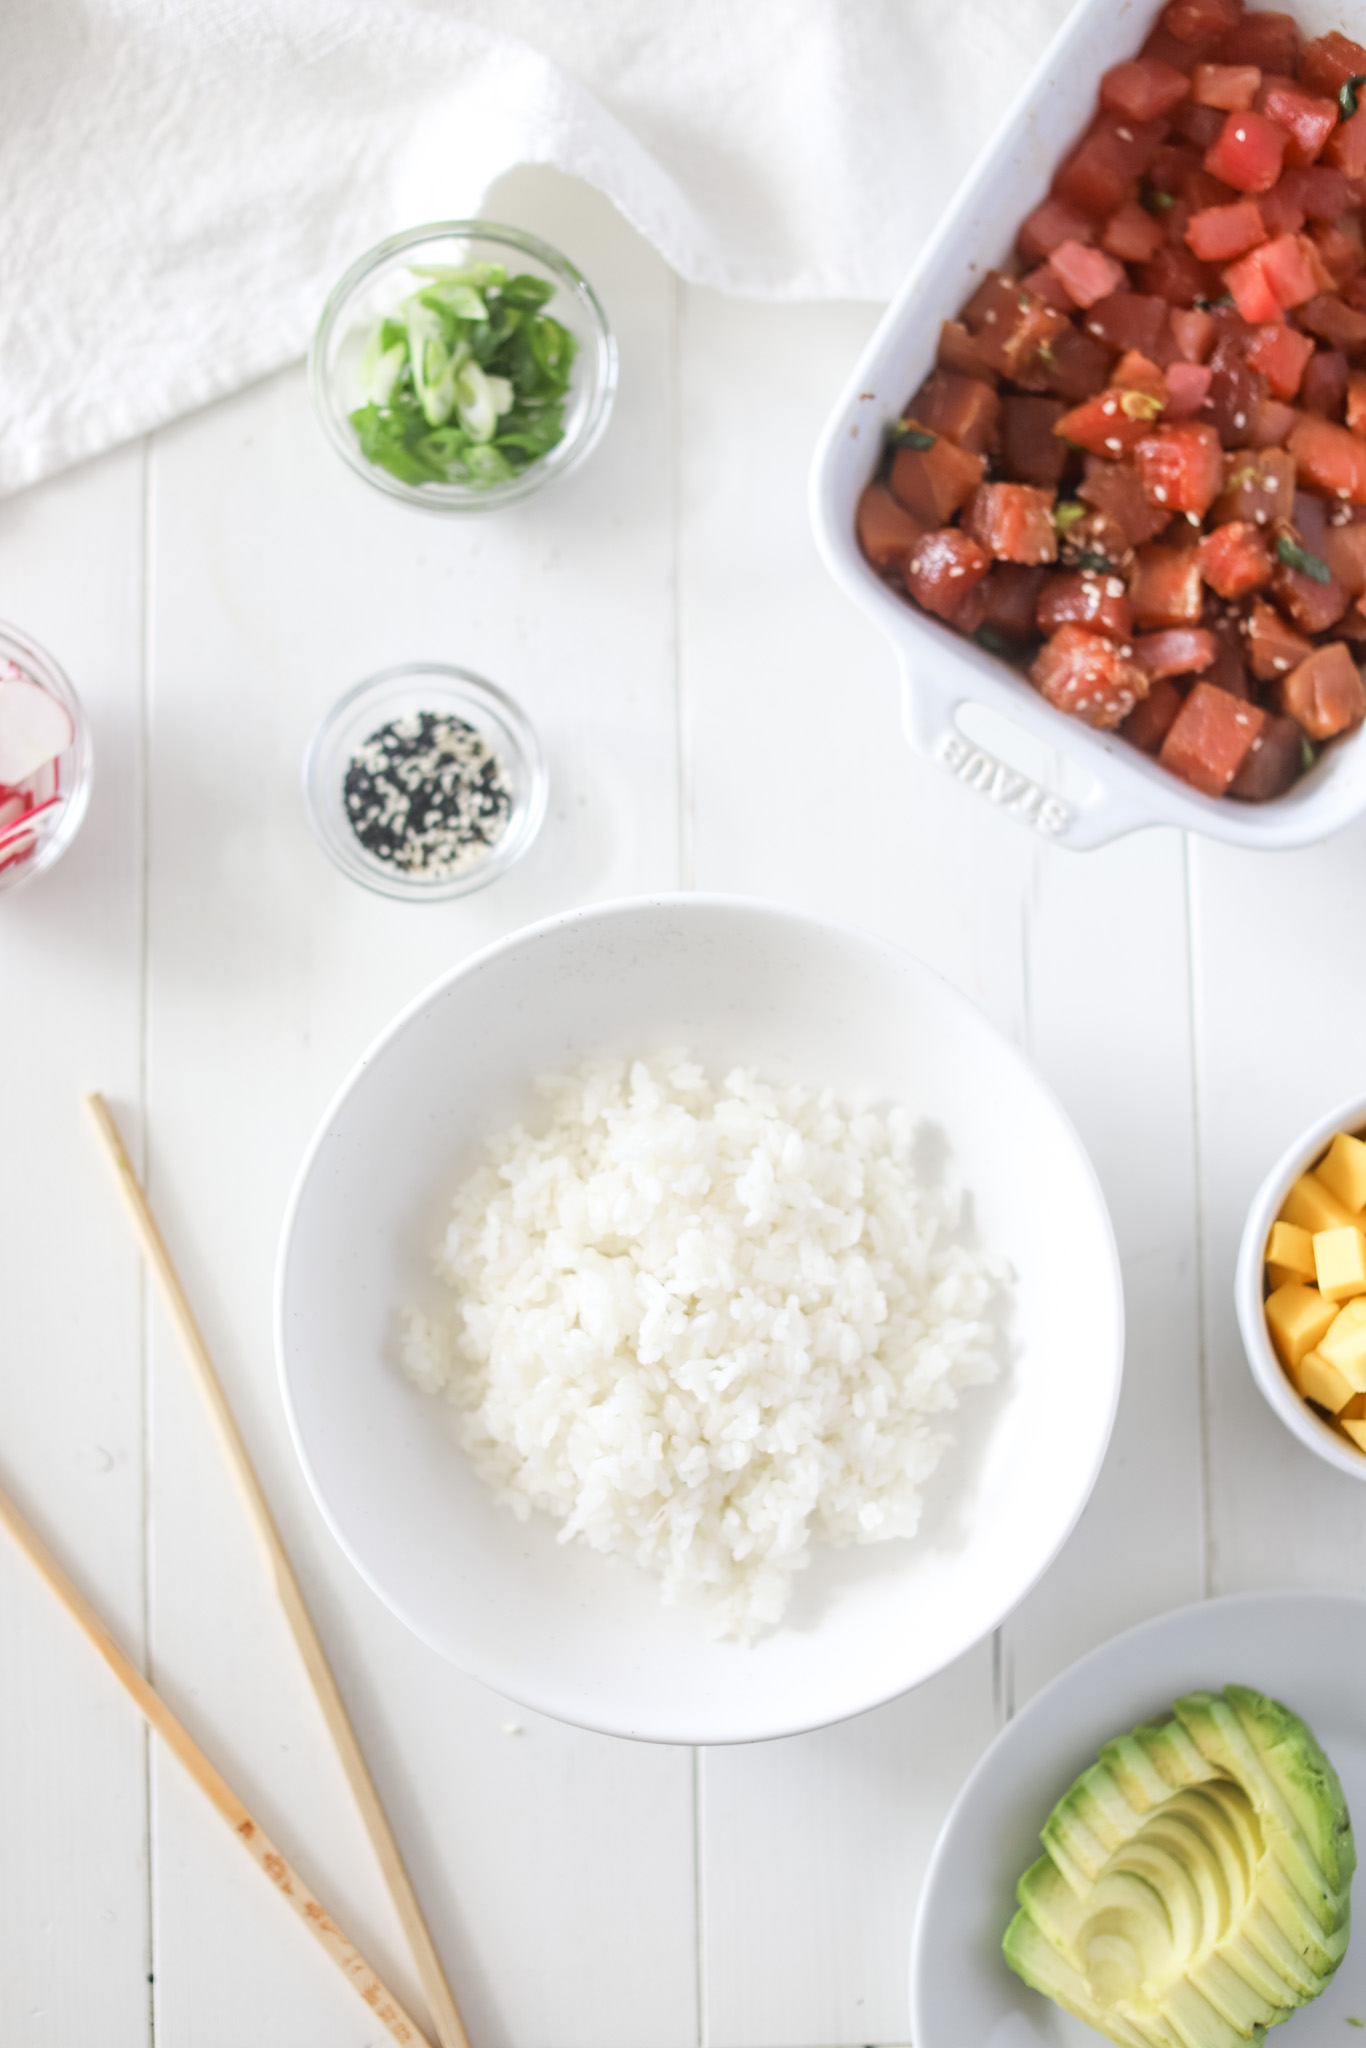 Bowls of Ingredients for Tuna Poke Bowls like : rice, tuna, avocado, mango, green onions